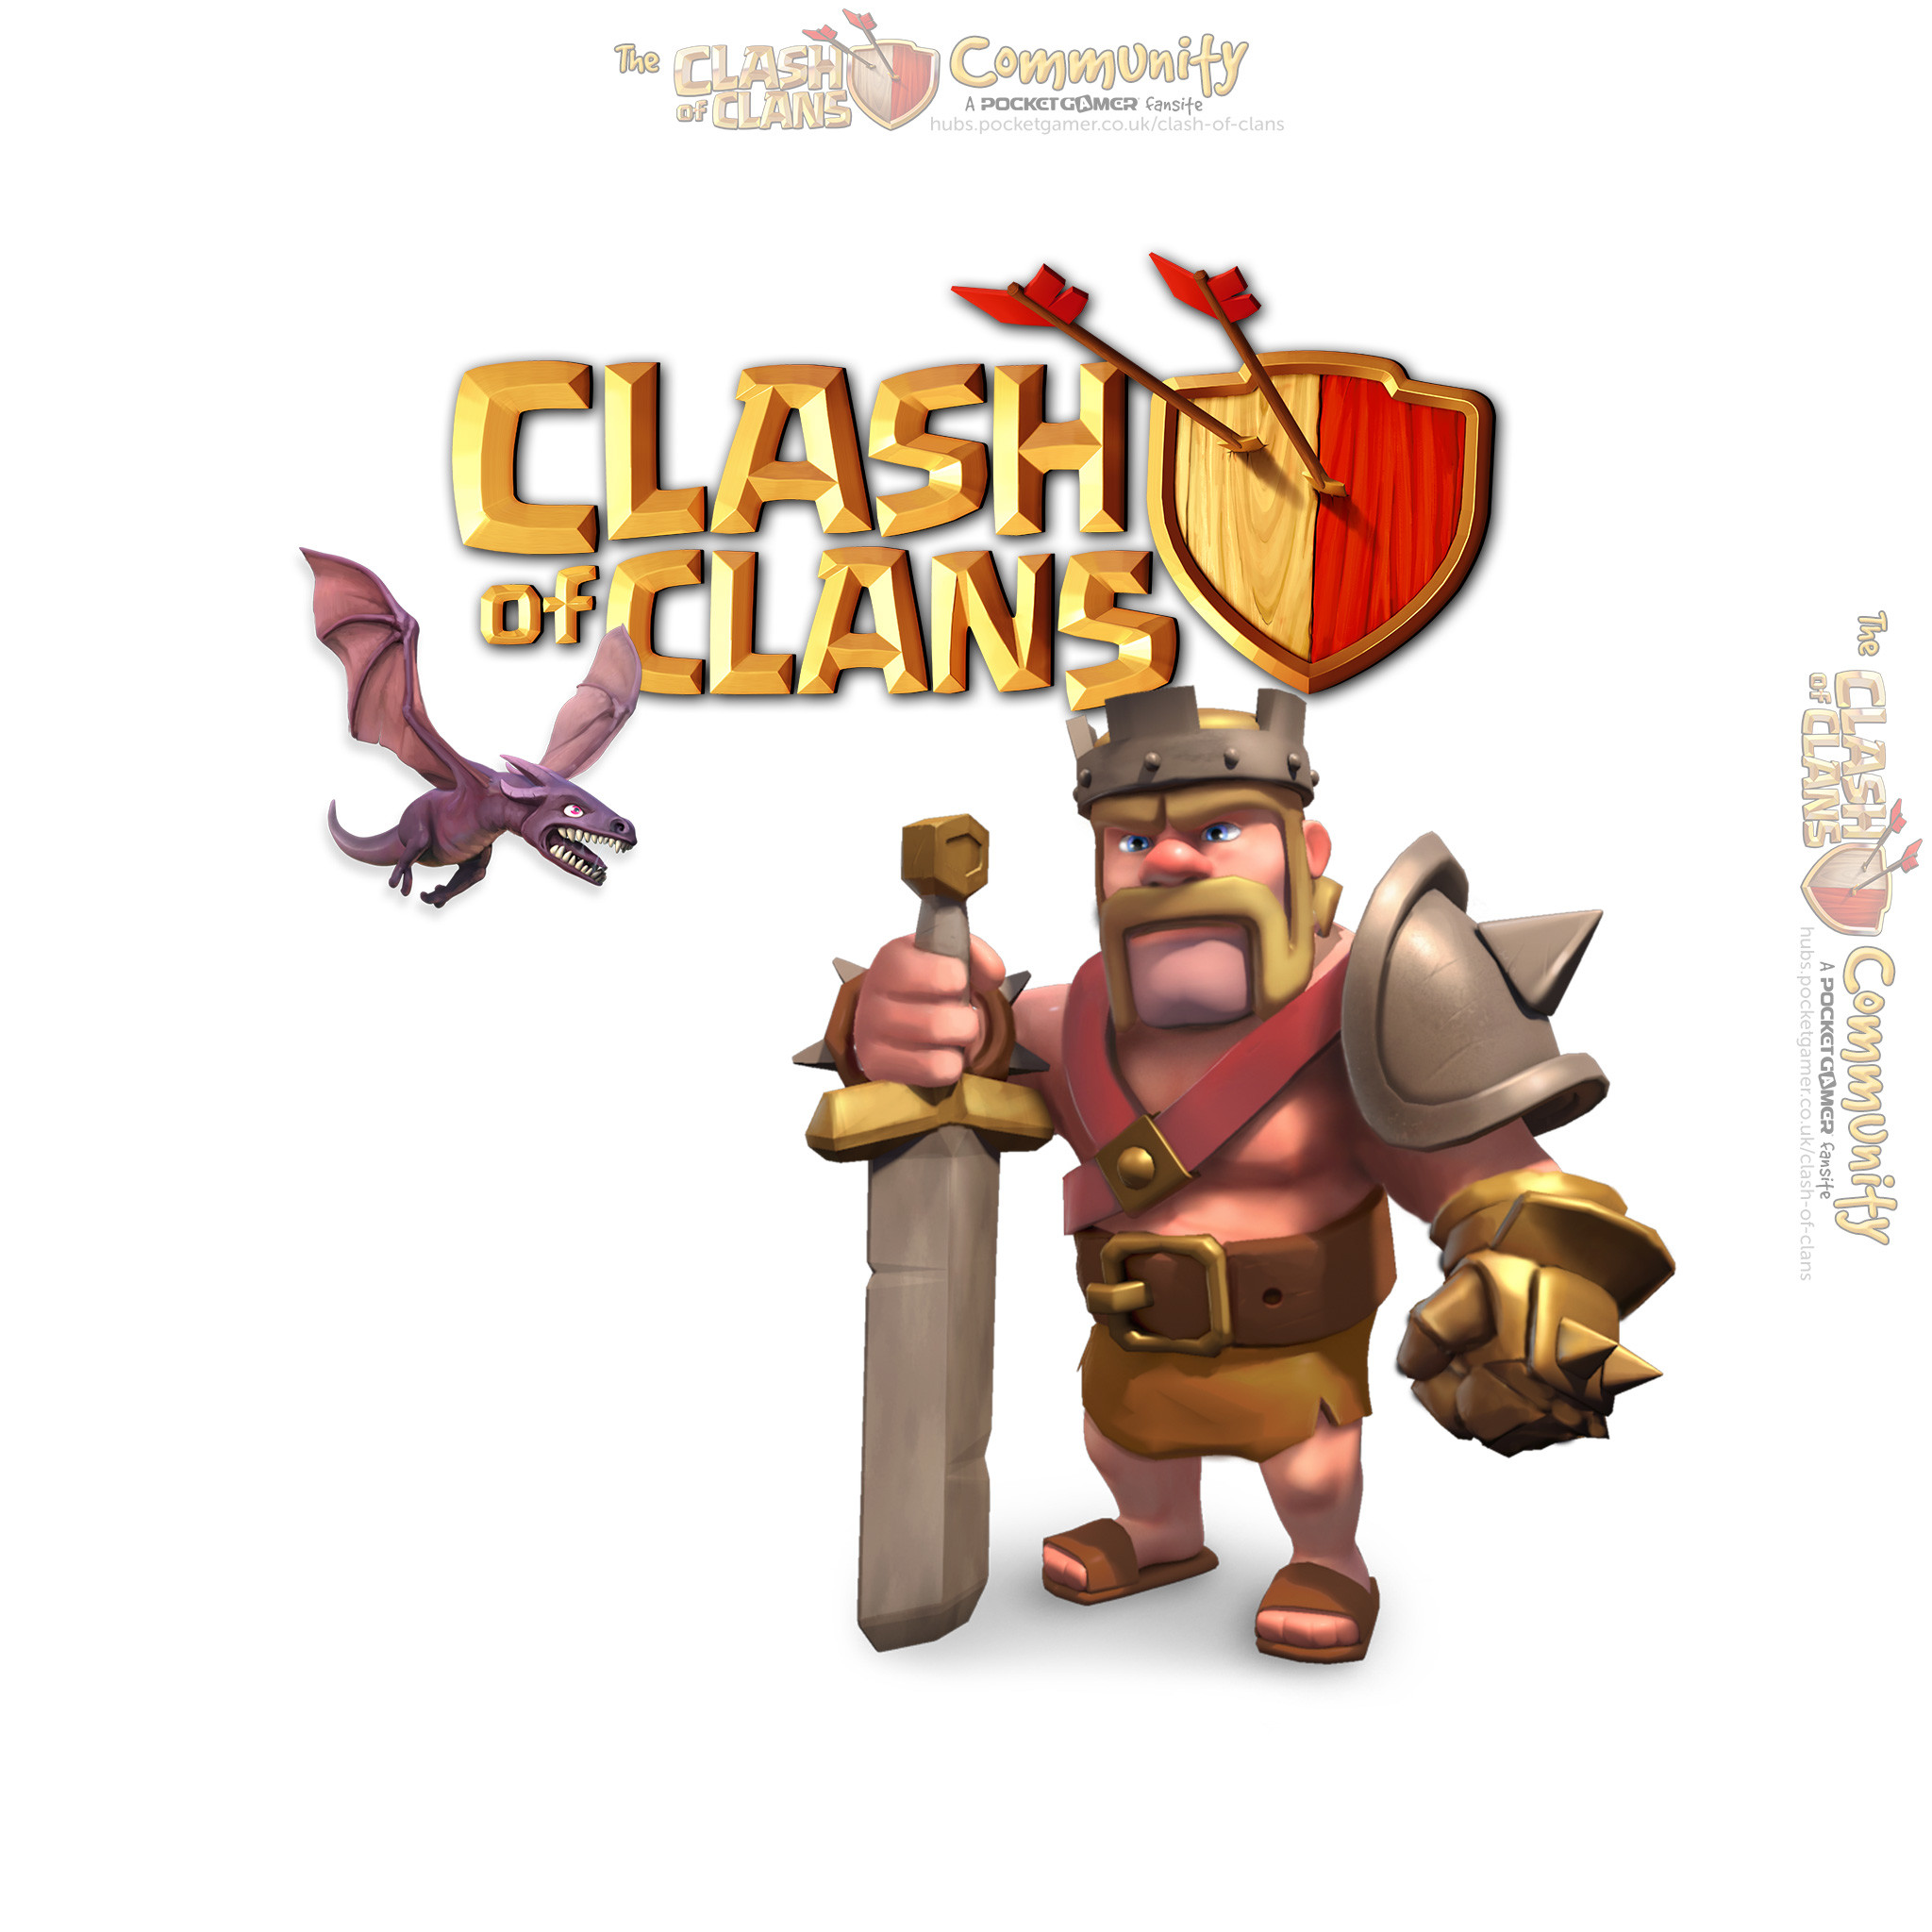 2048x2048 Clash of Clans iPad Wallpaper